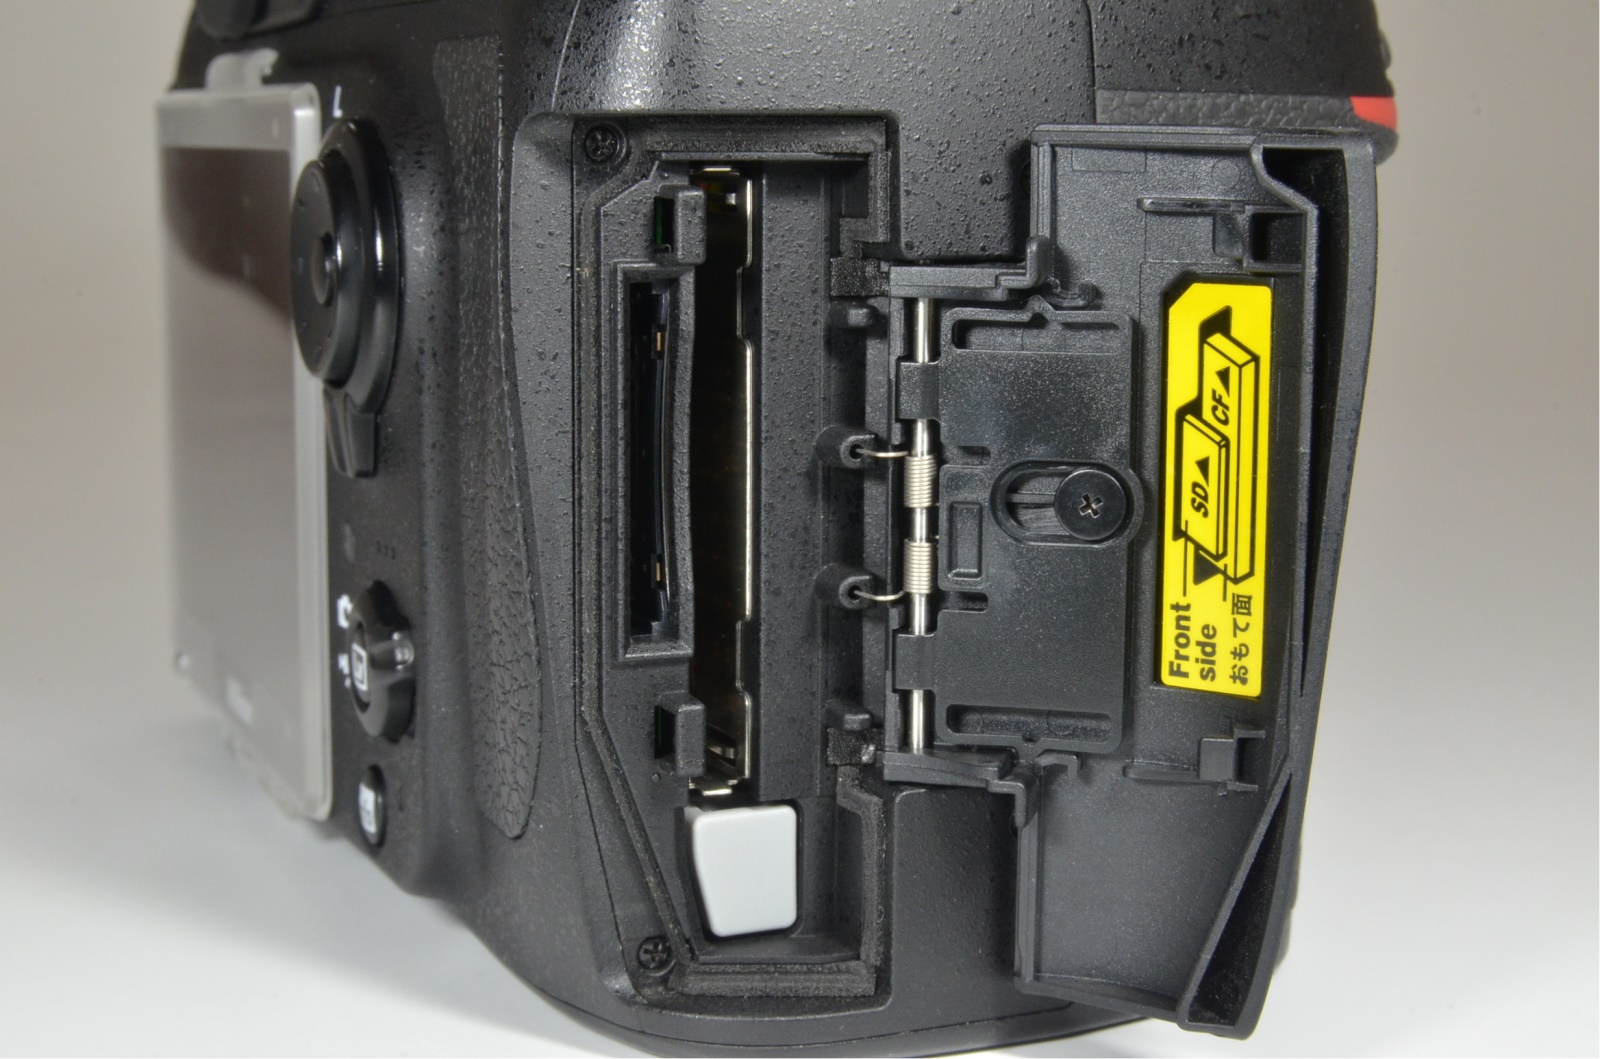 nikon d800 36.3mp digital slr camera body shutter count 9040 from japan